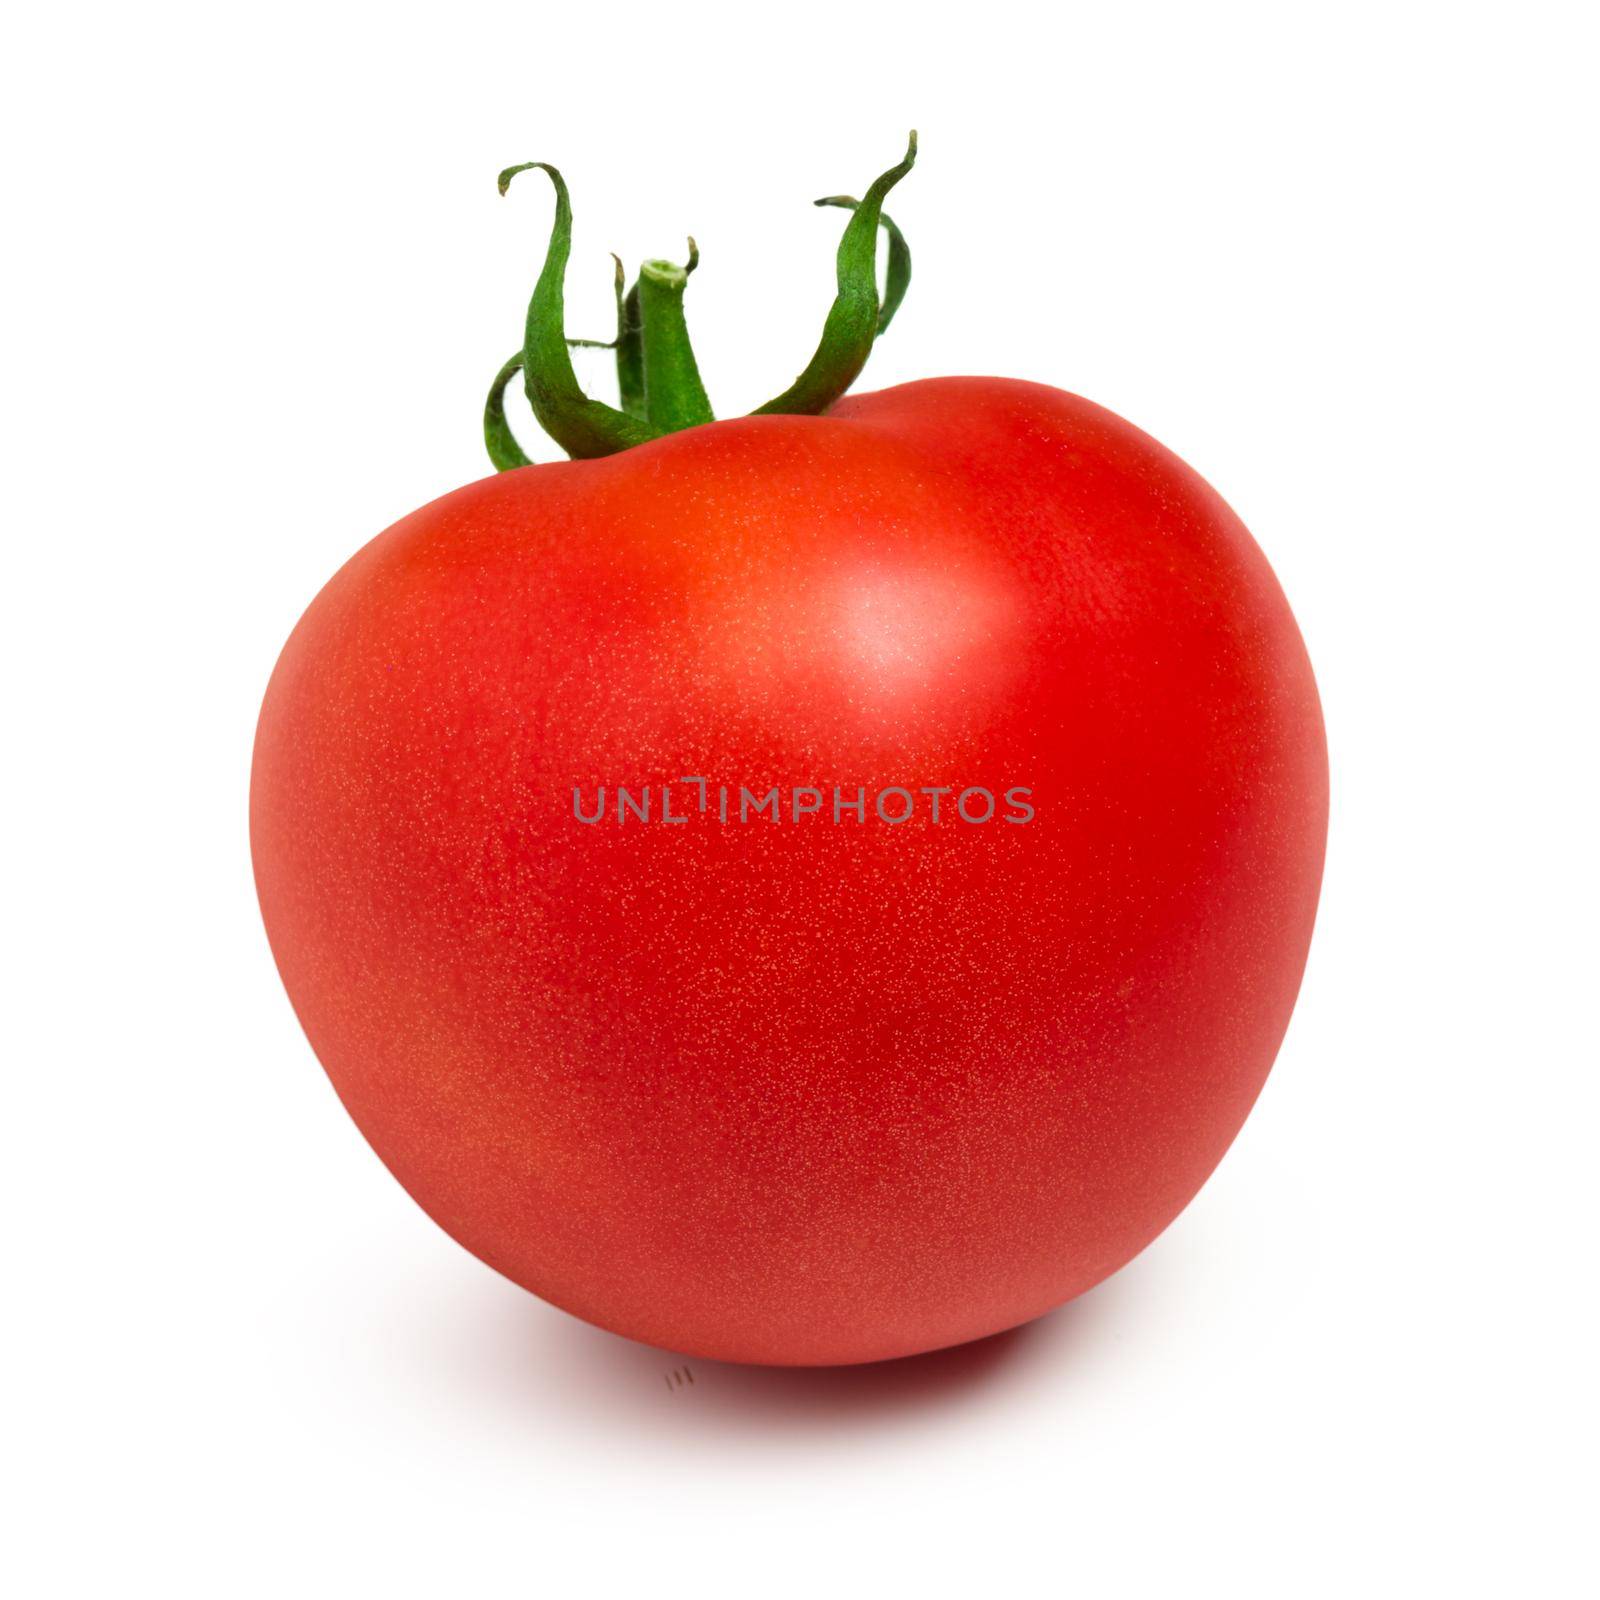 Ripe red tomato isolated on white background. creative photo.